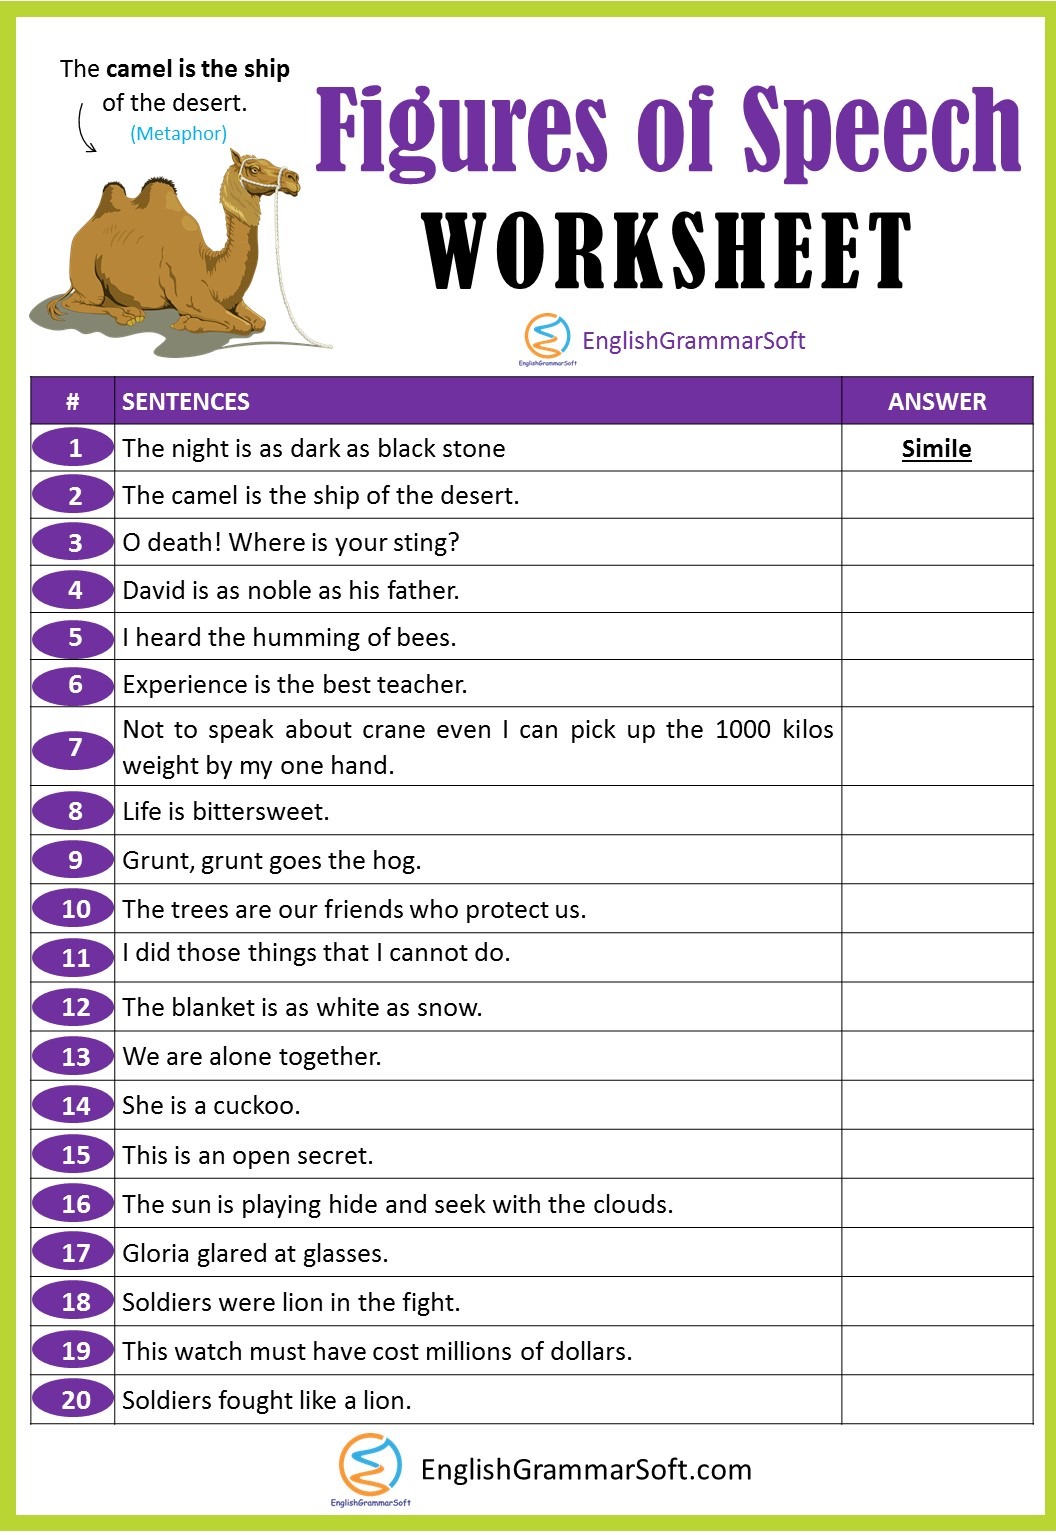 worksheet answers free